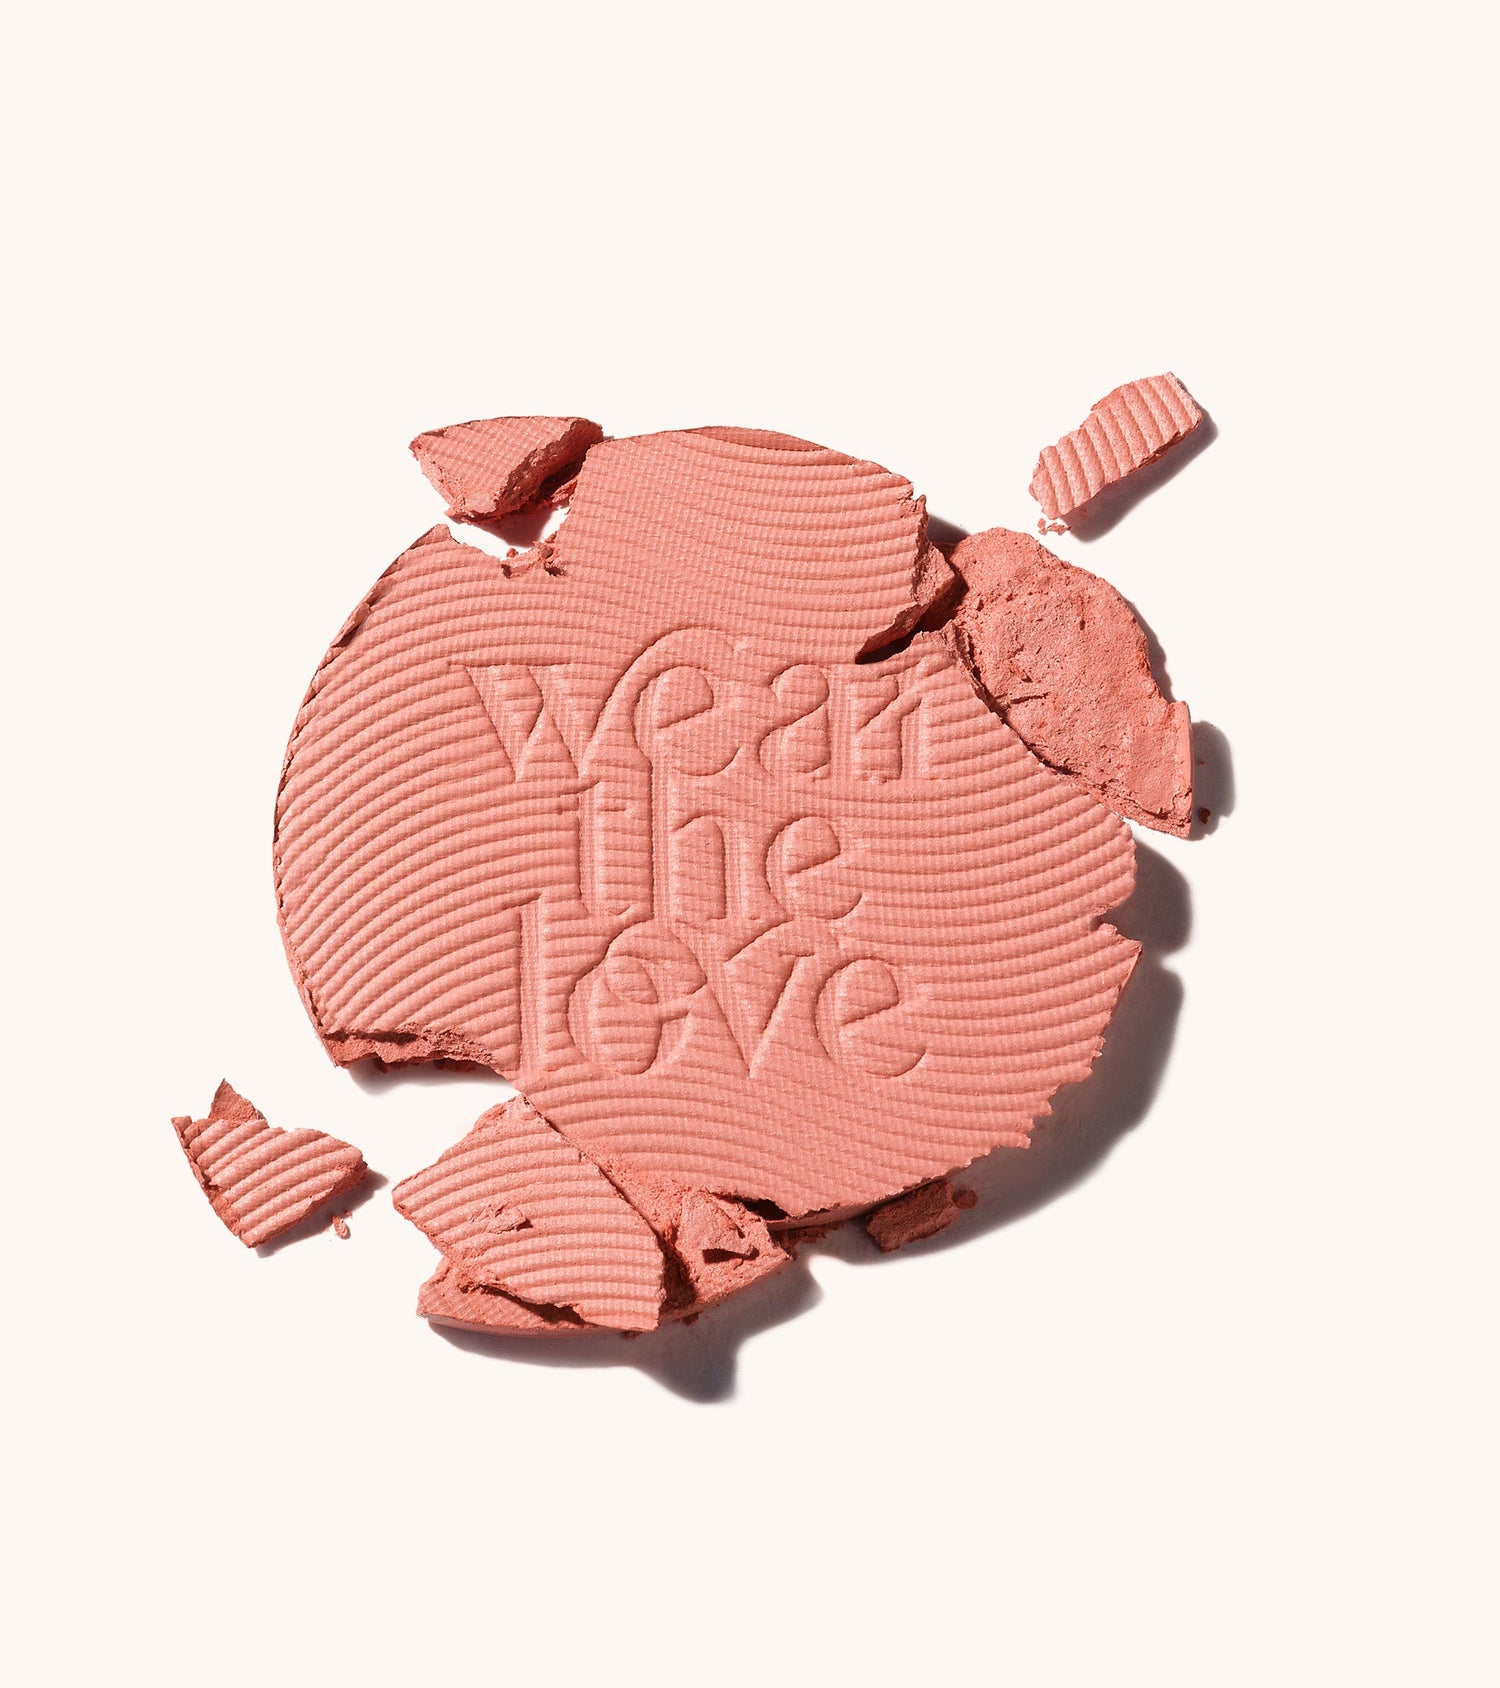 Velvet Love Blush Powder (Love) Main Image featured